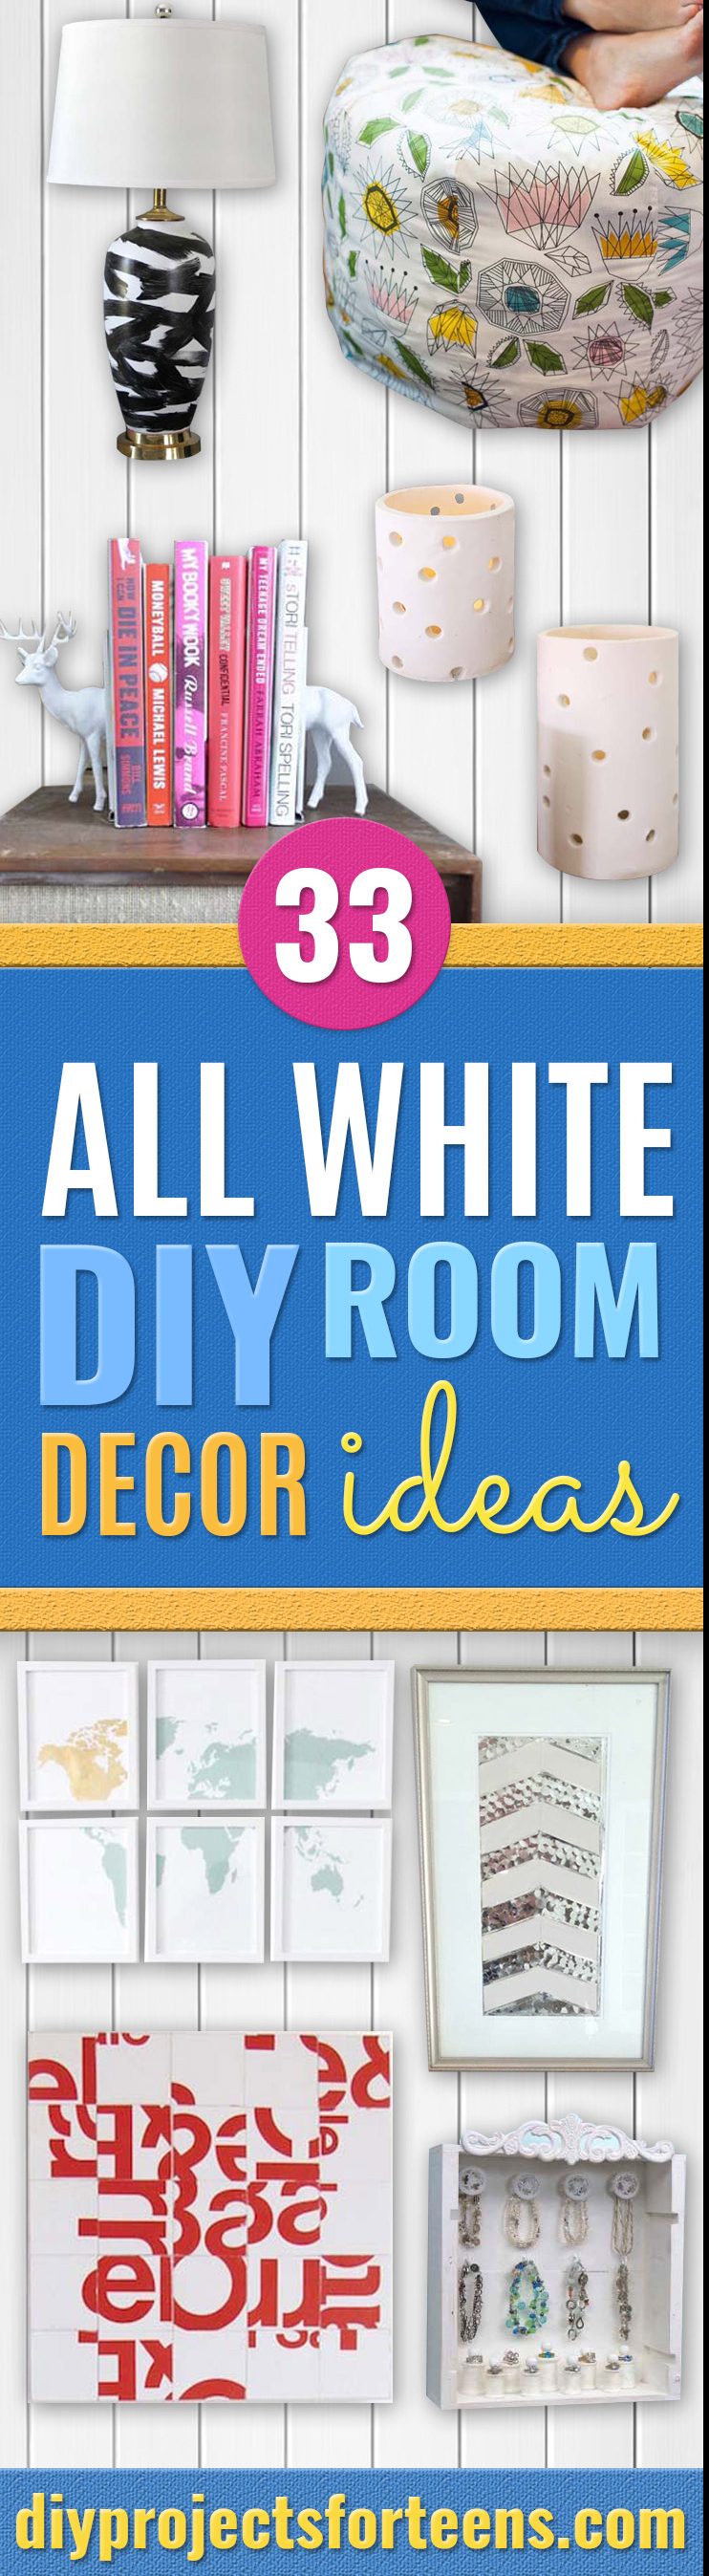 All White DIY Room Decor